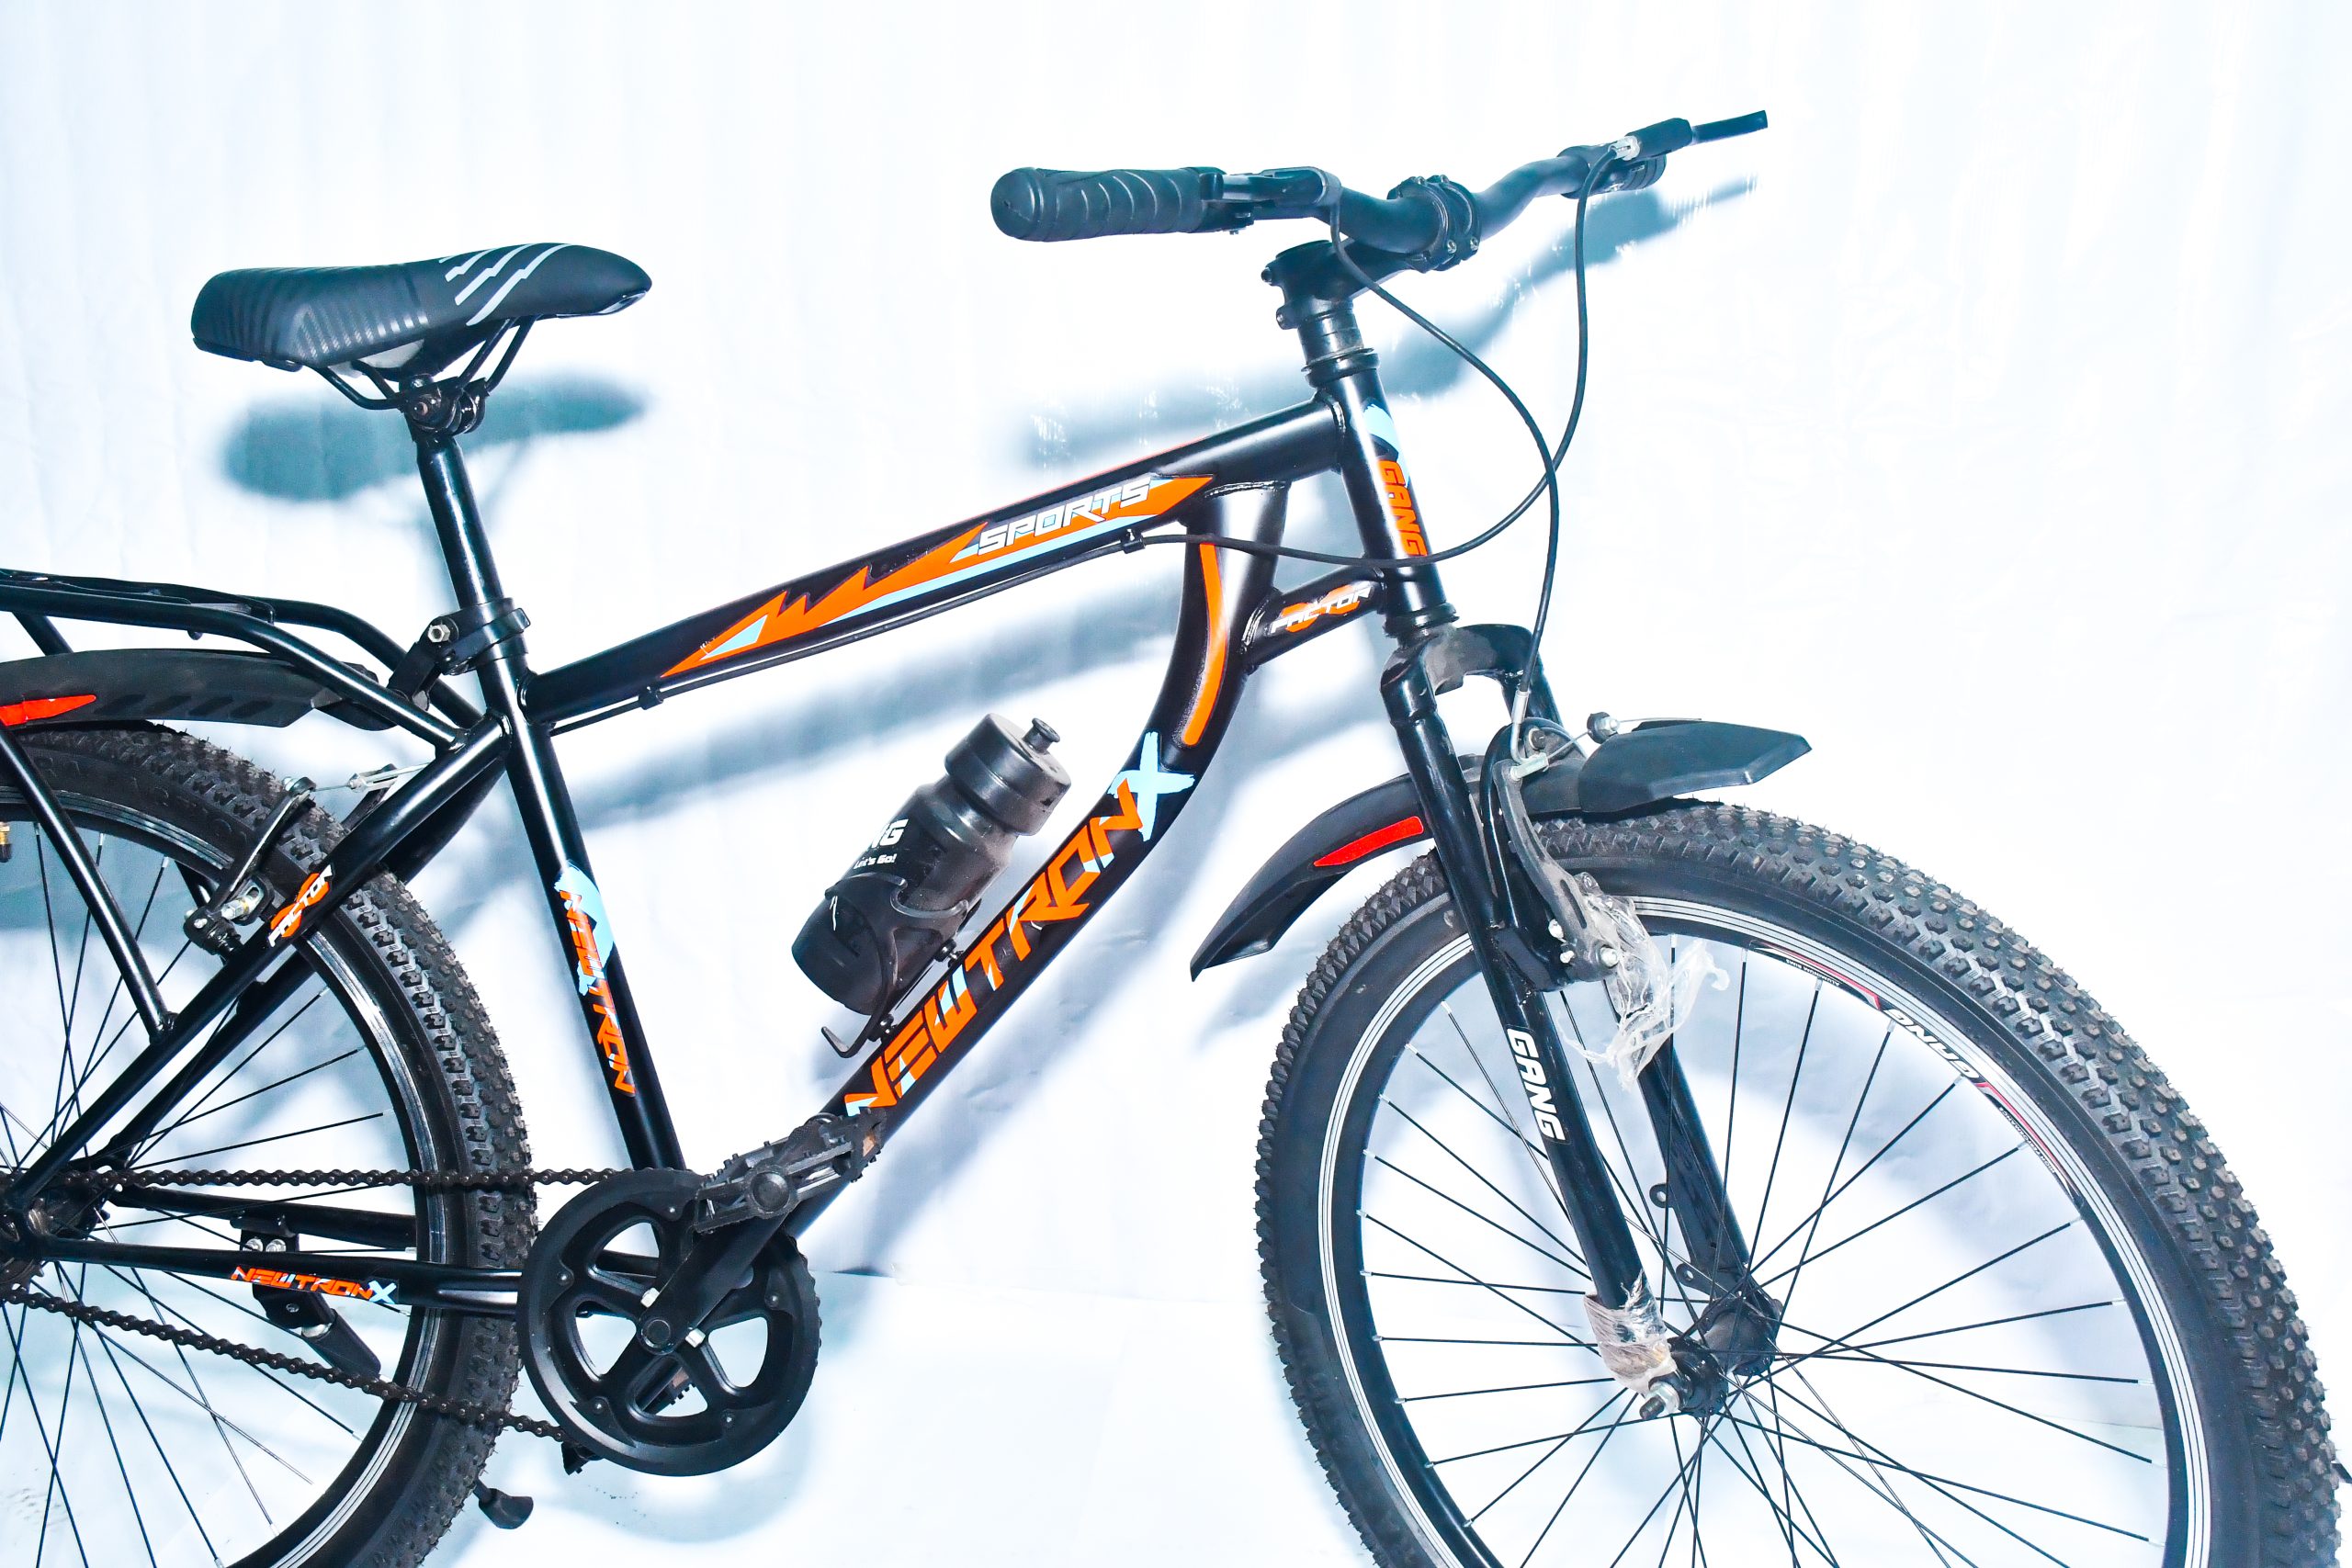 Gang newtron-x bicycle 26